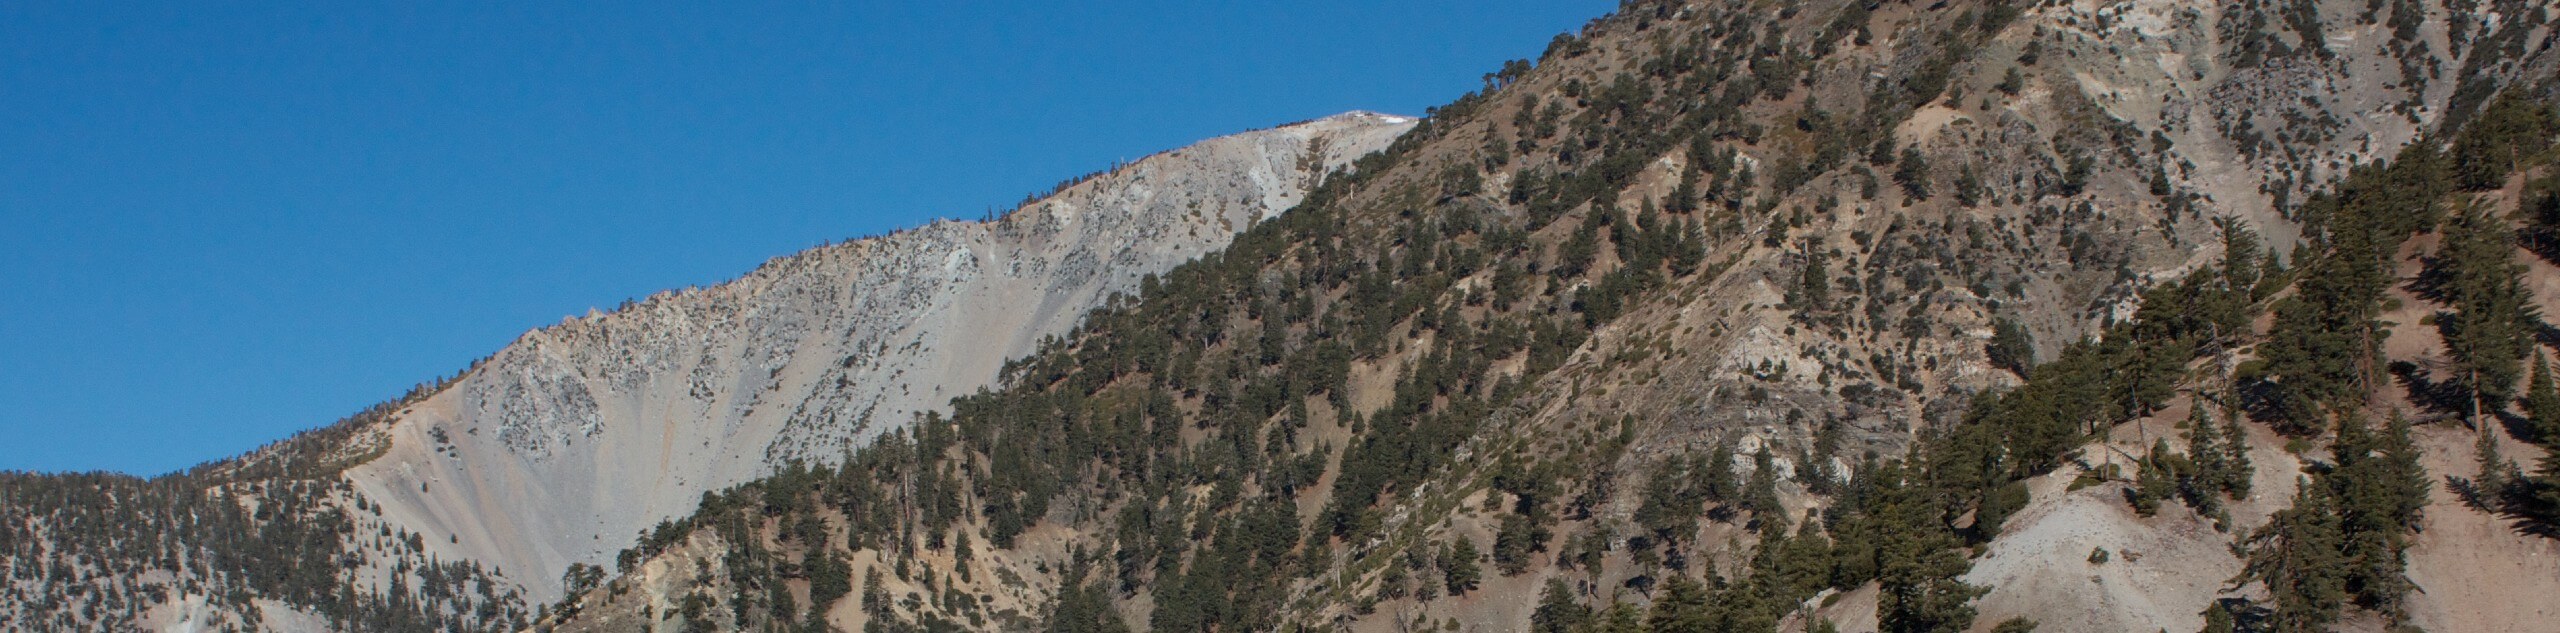 Mount San Antonio and Mount Baldy Notch Trail